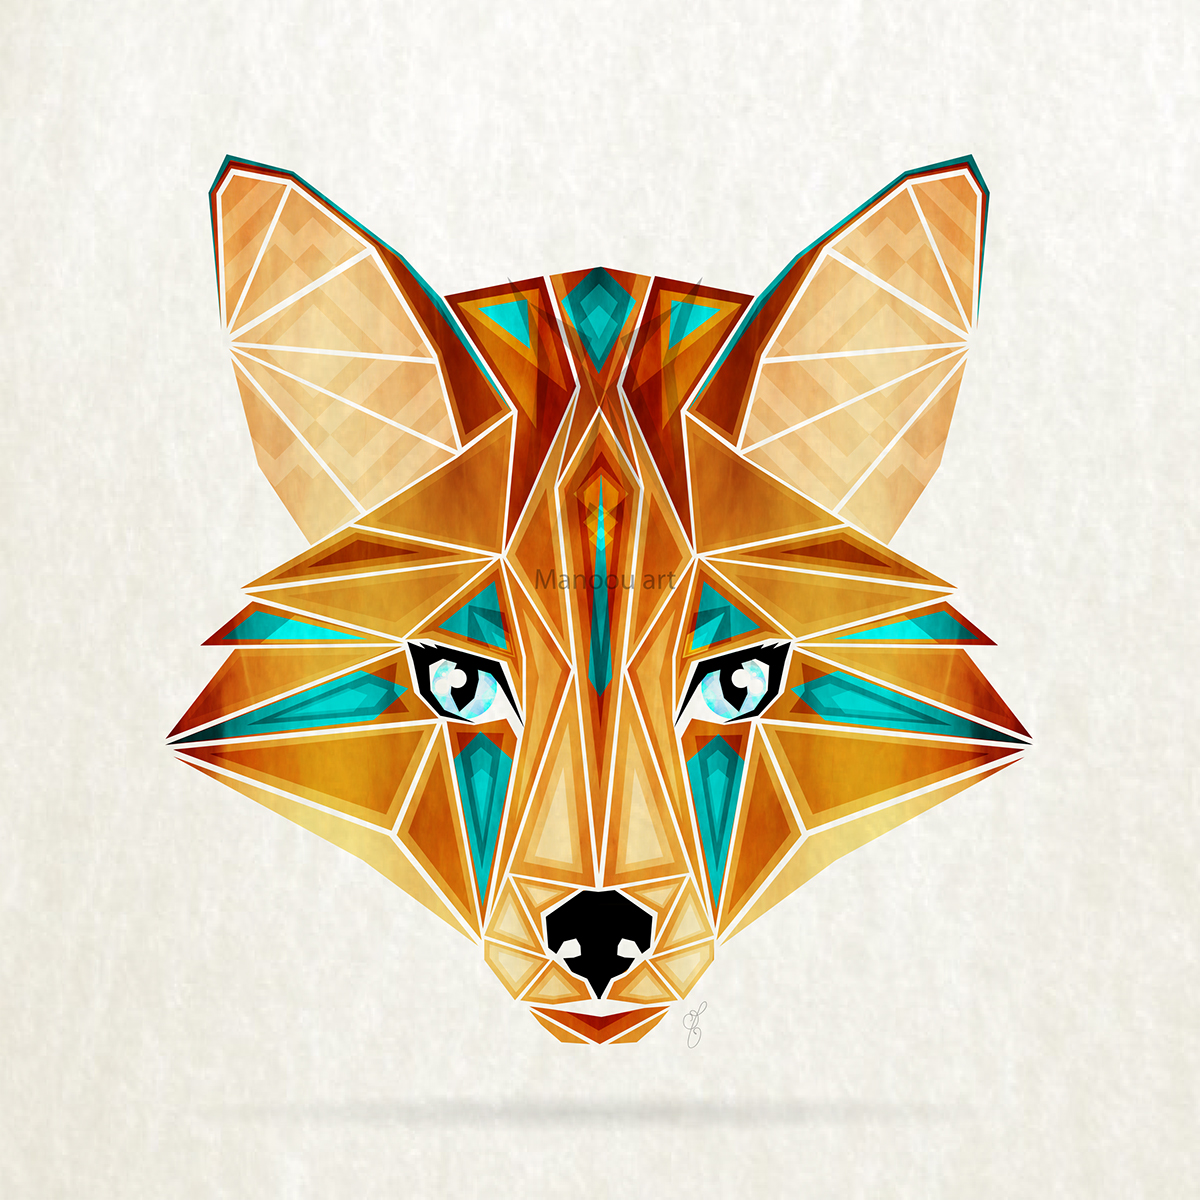 FOX renard animal geometric triangle shape symmetric abstract wild savage